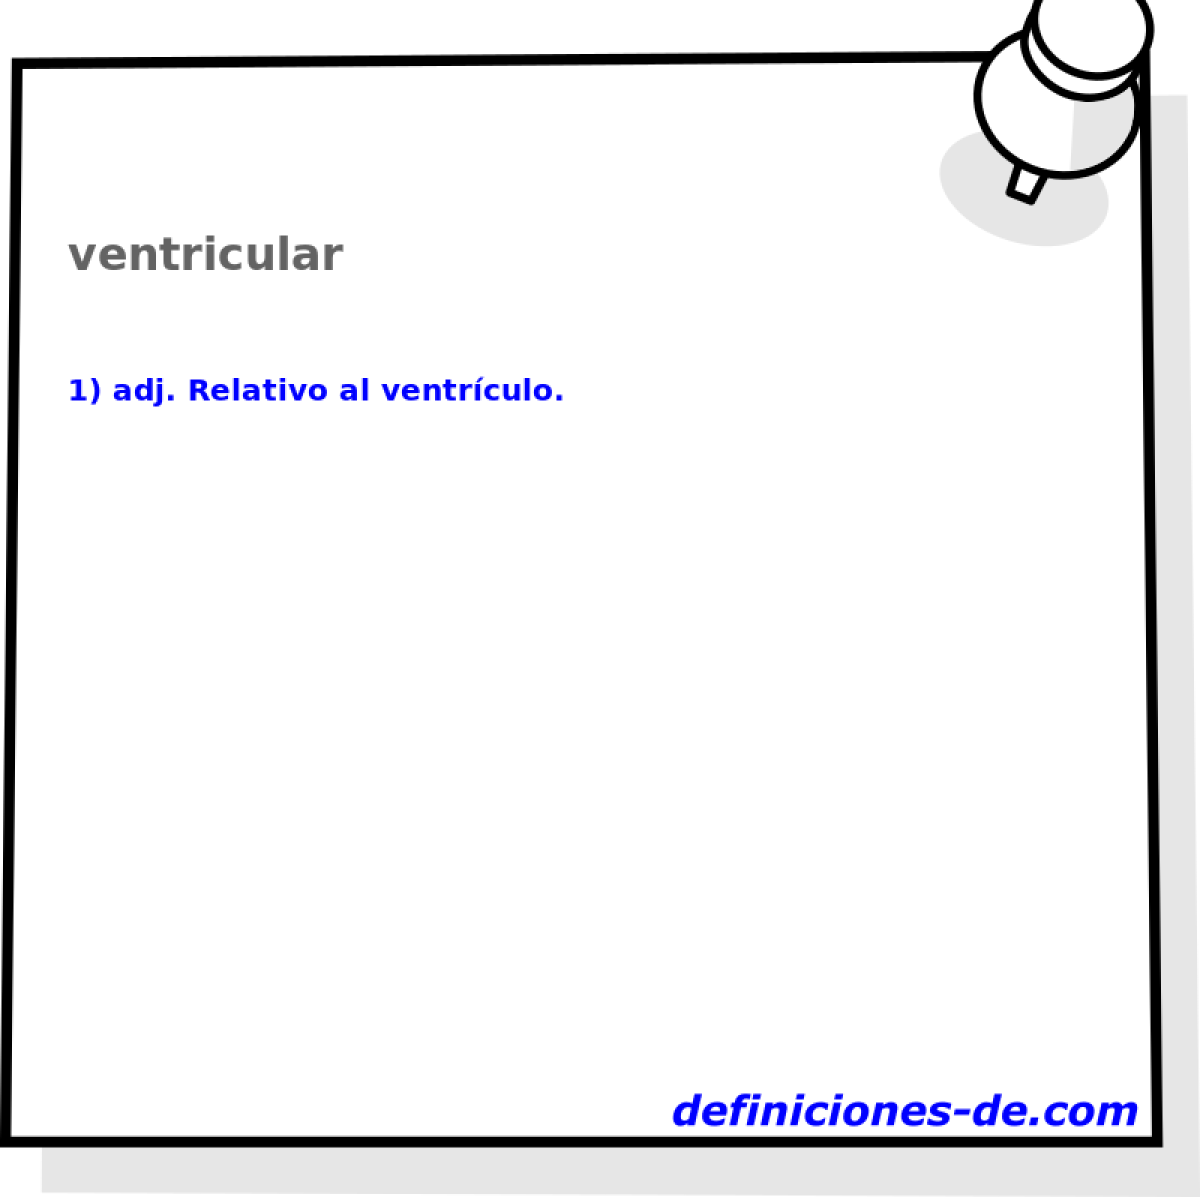 ventricular 